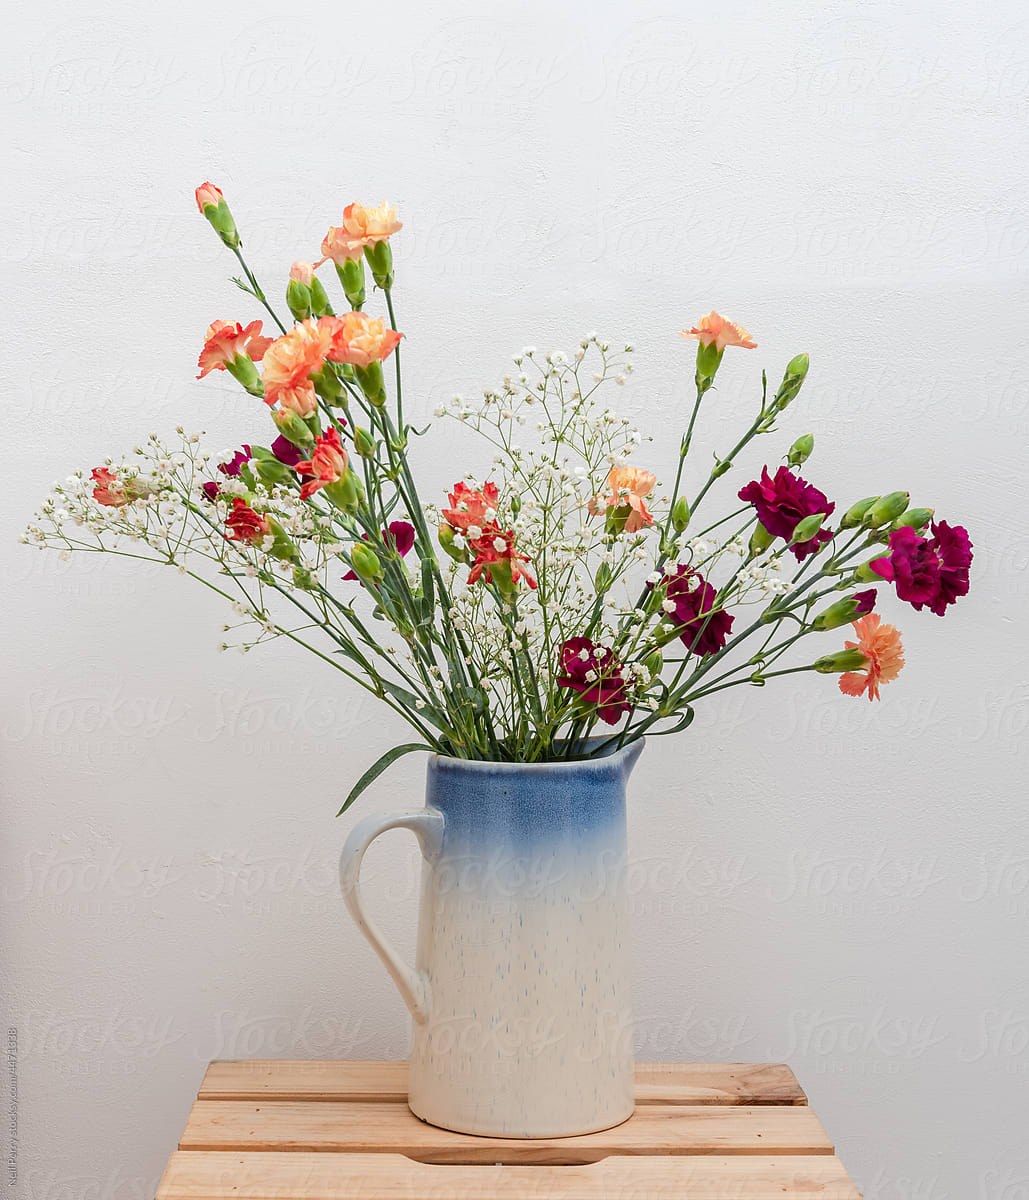 Flowers in ceramic jug